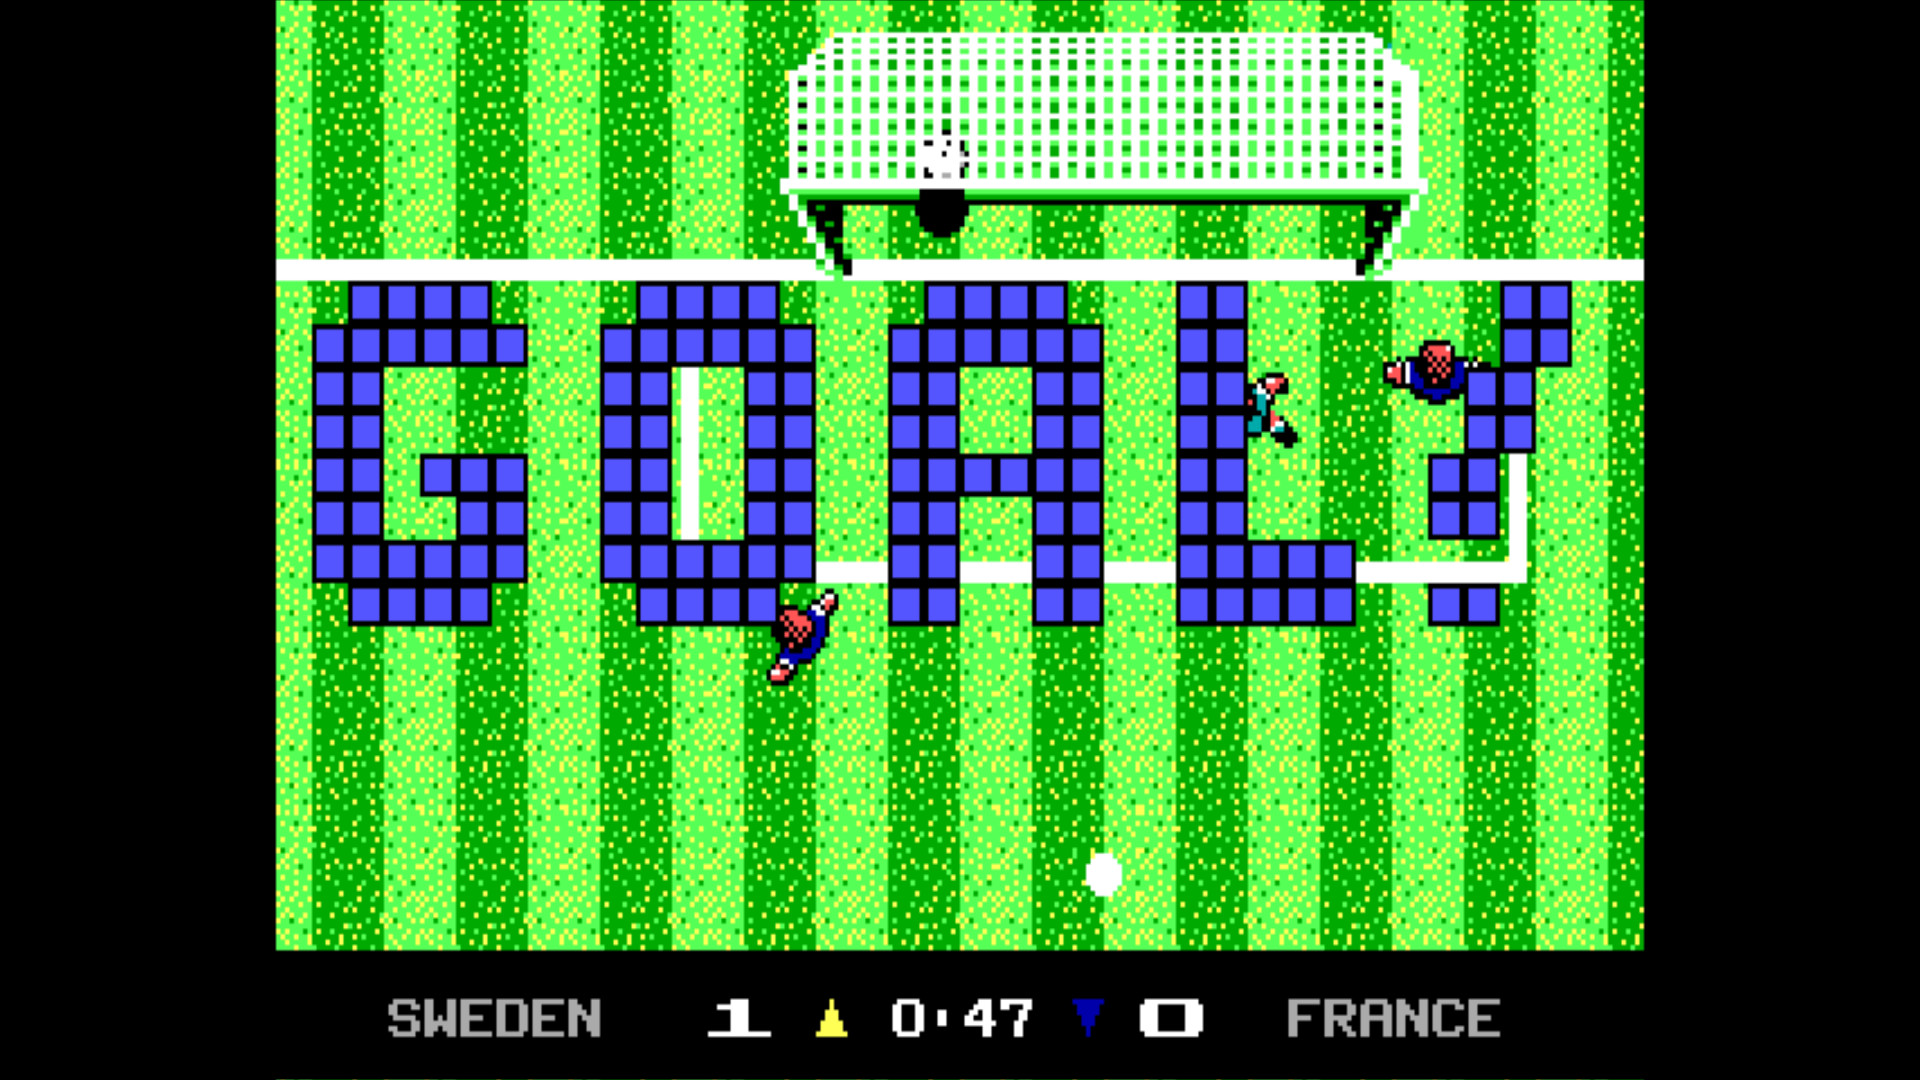 MicroProse Soccer screenshot